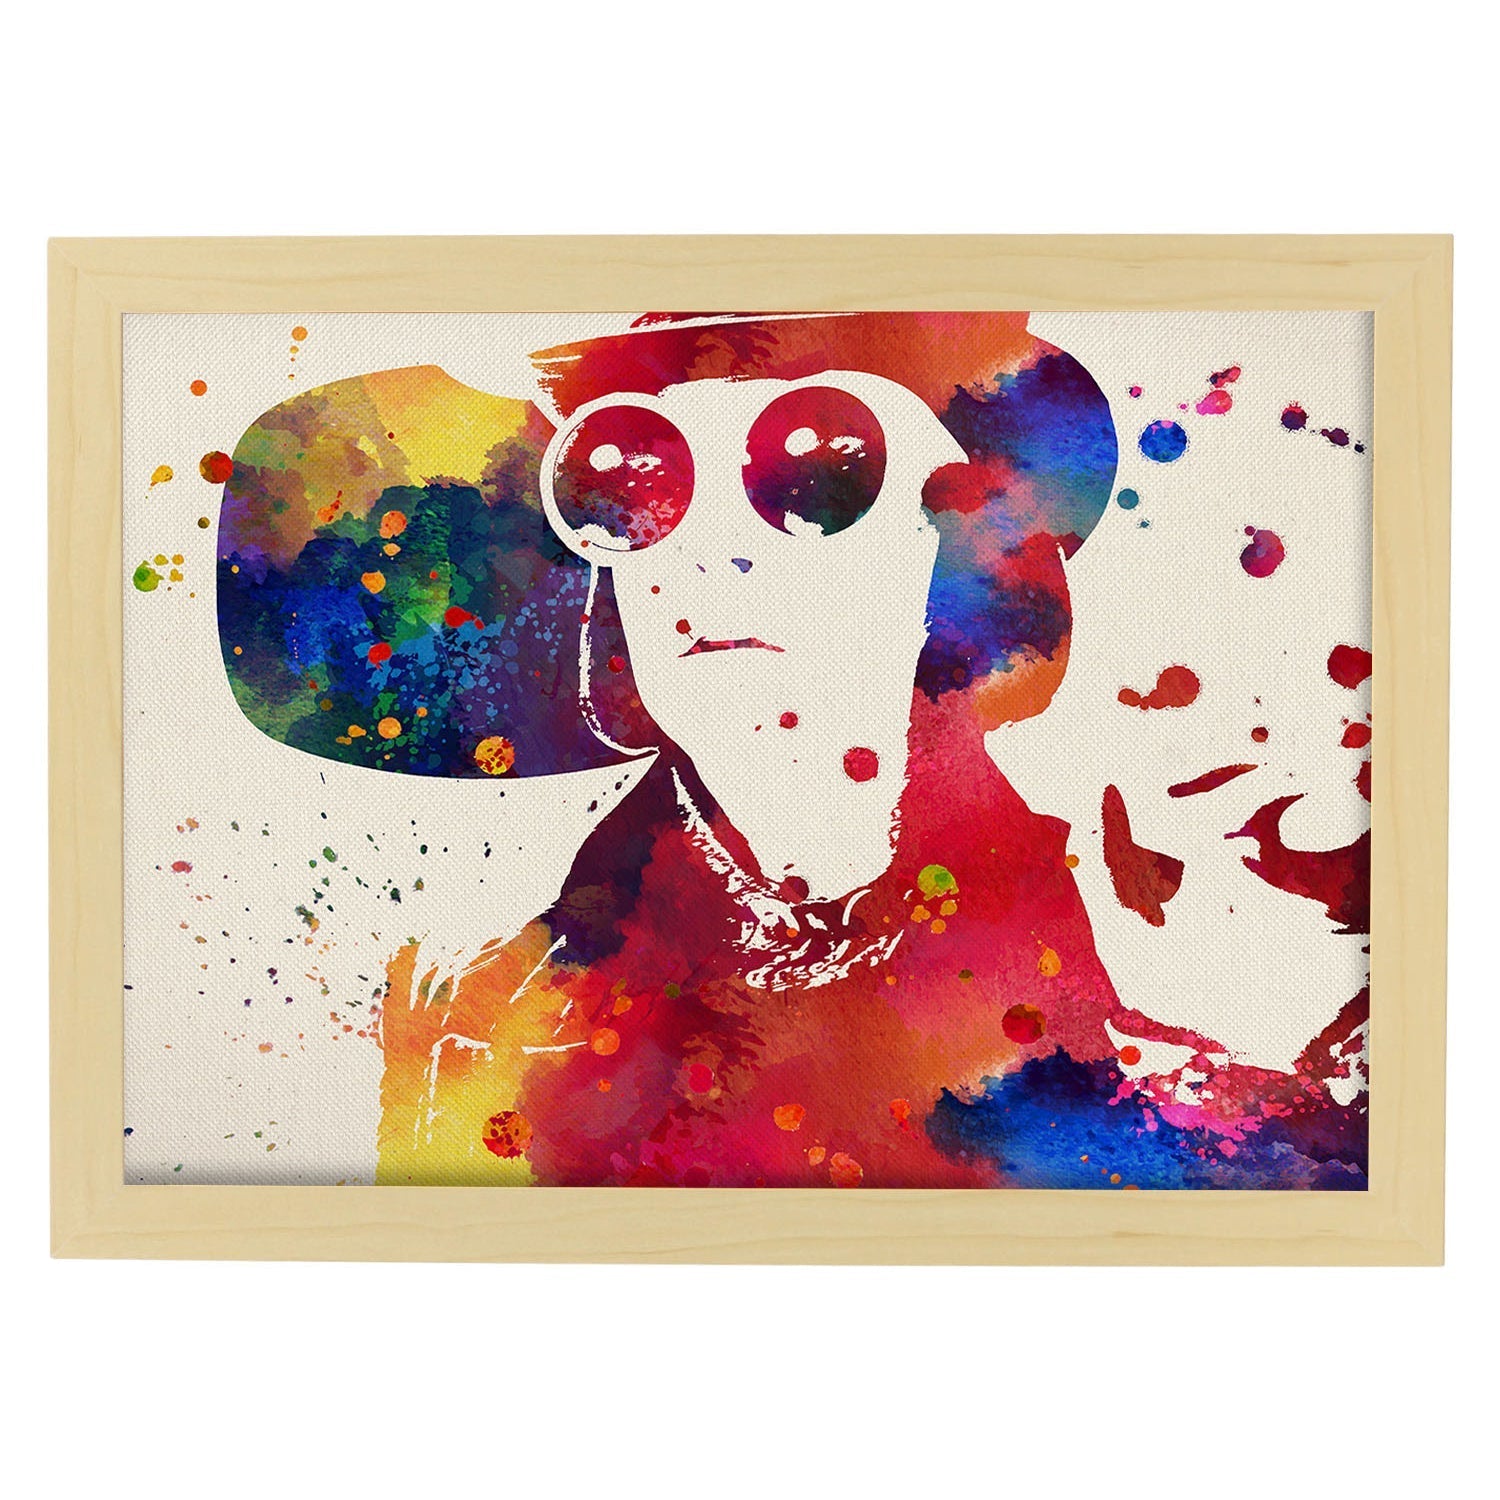 Poster de Willy Wonka con diseño acuarela. Mix de láminas con estilo acuarela-Artwork-Nacnic-A4-Marco Madera clara-Nacnic Estudio SL